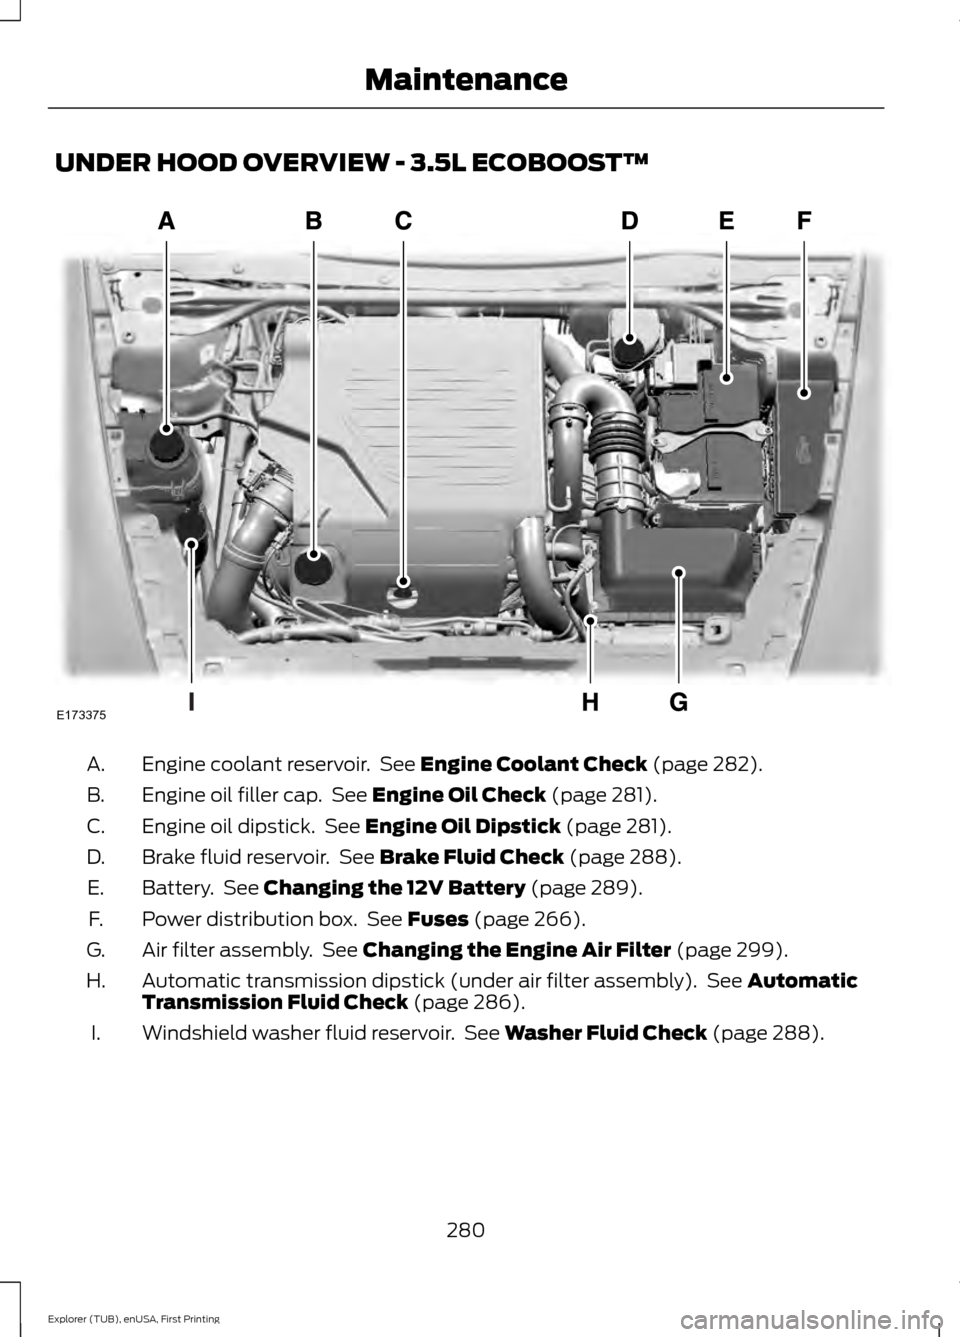 FORD EXPLORER 2016 5.G User Guide UNDER HOOD OVERVIEW - 3.5L ECOBOOST™
Engine coolant reservoir.  See Engine Coolant Check (page 282).
A.
Engine oil filler cap.  See 
Engine Oil Check (page 281).
B.
Engine oil dipstick.  See 
Engine